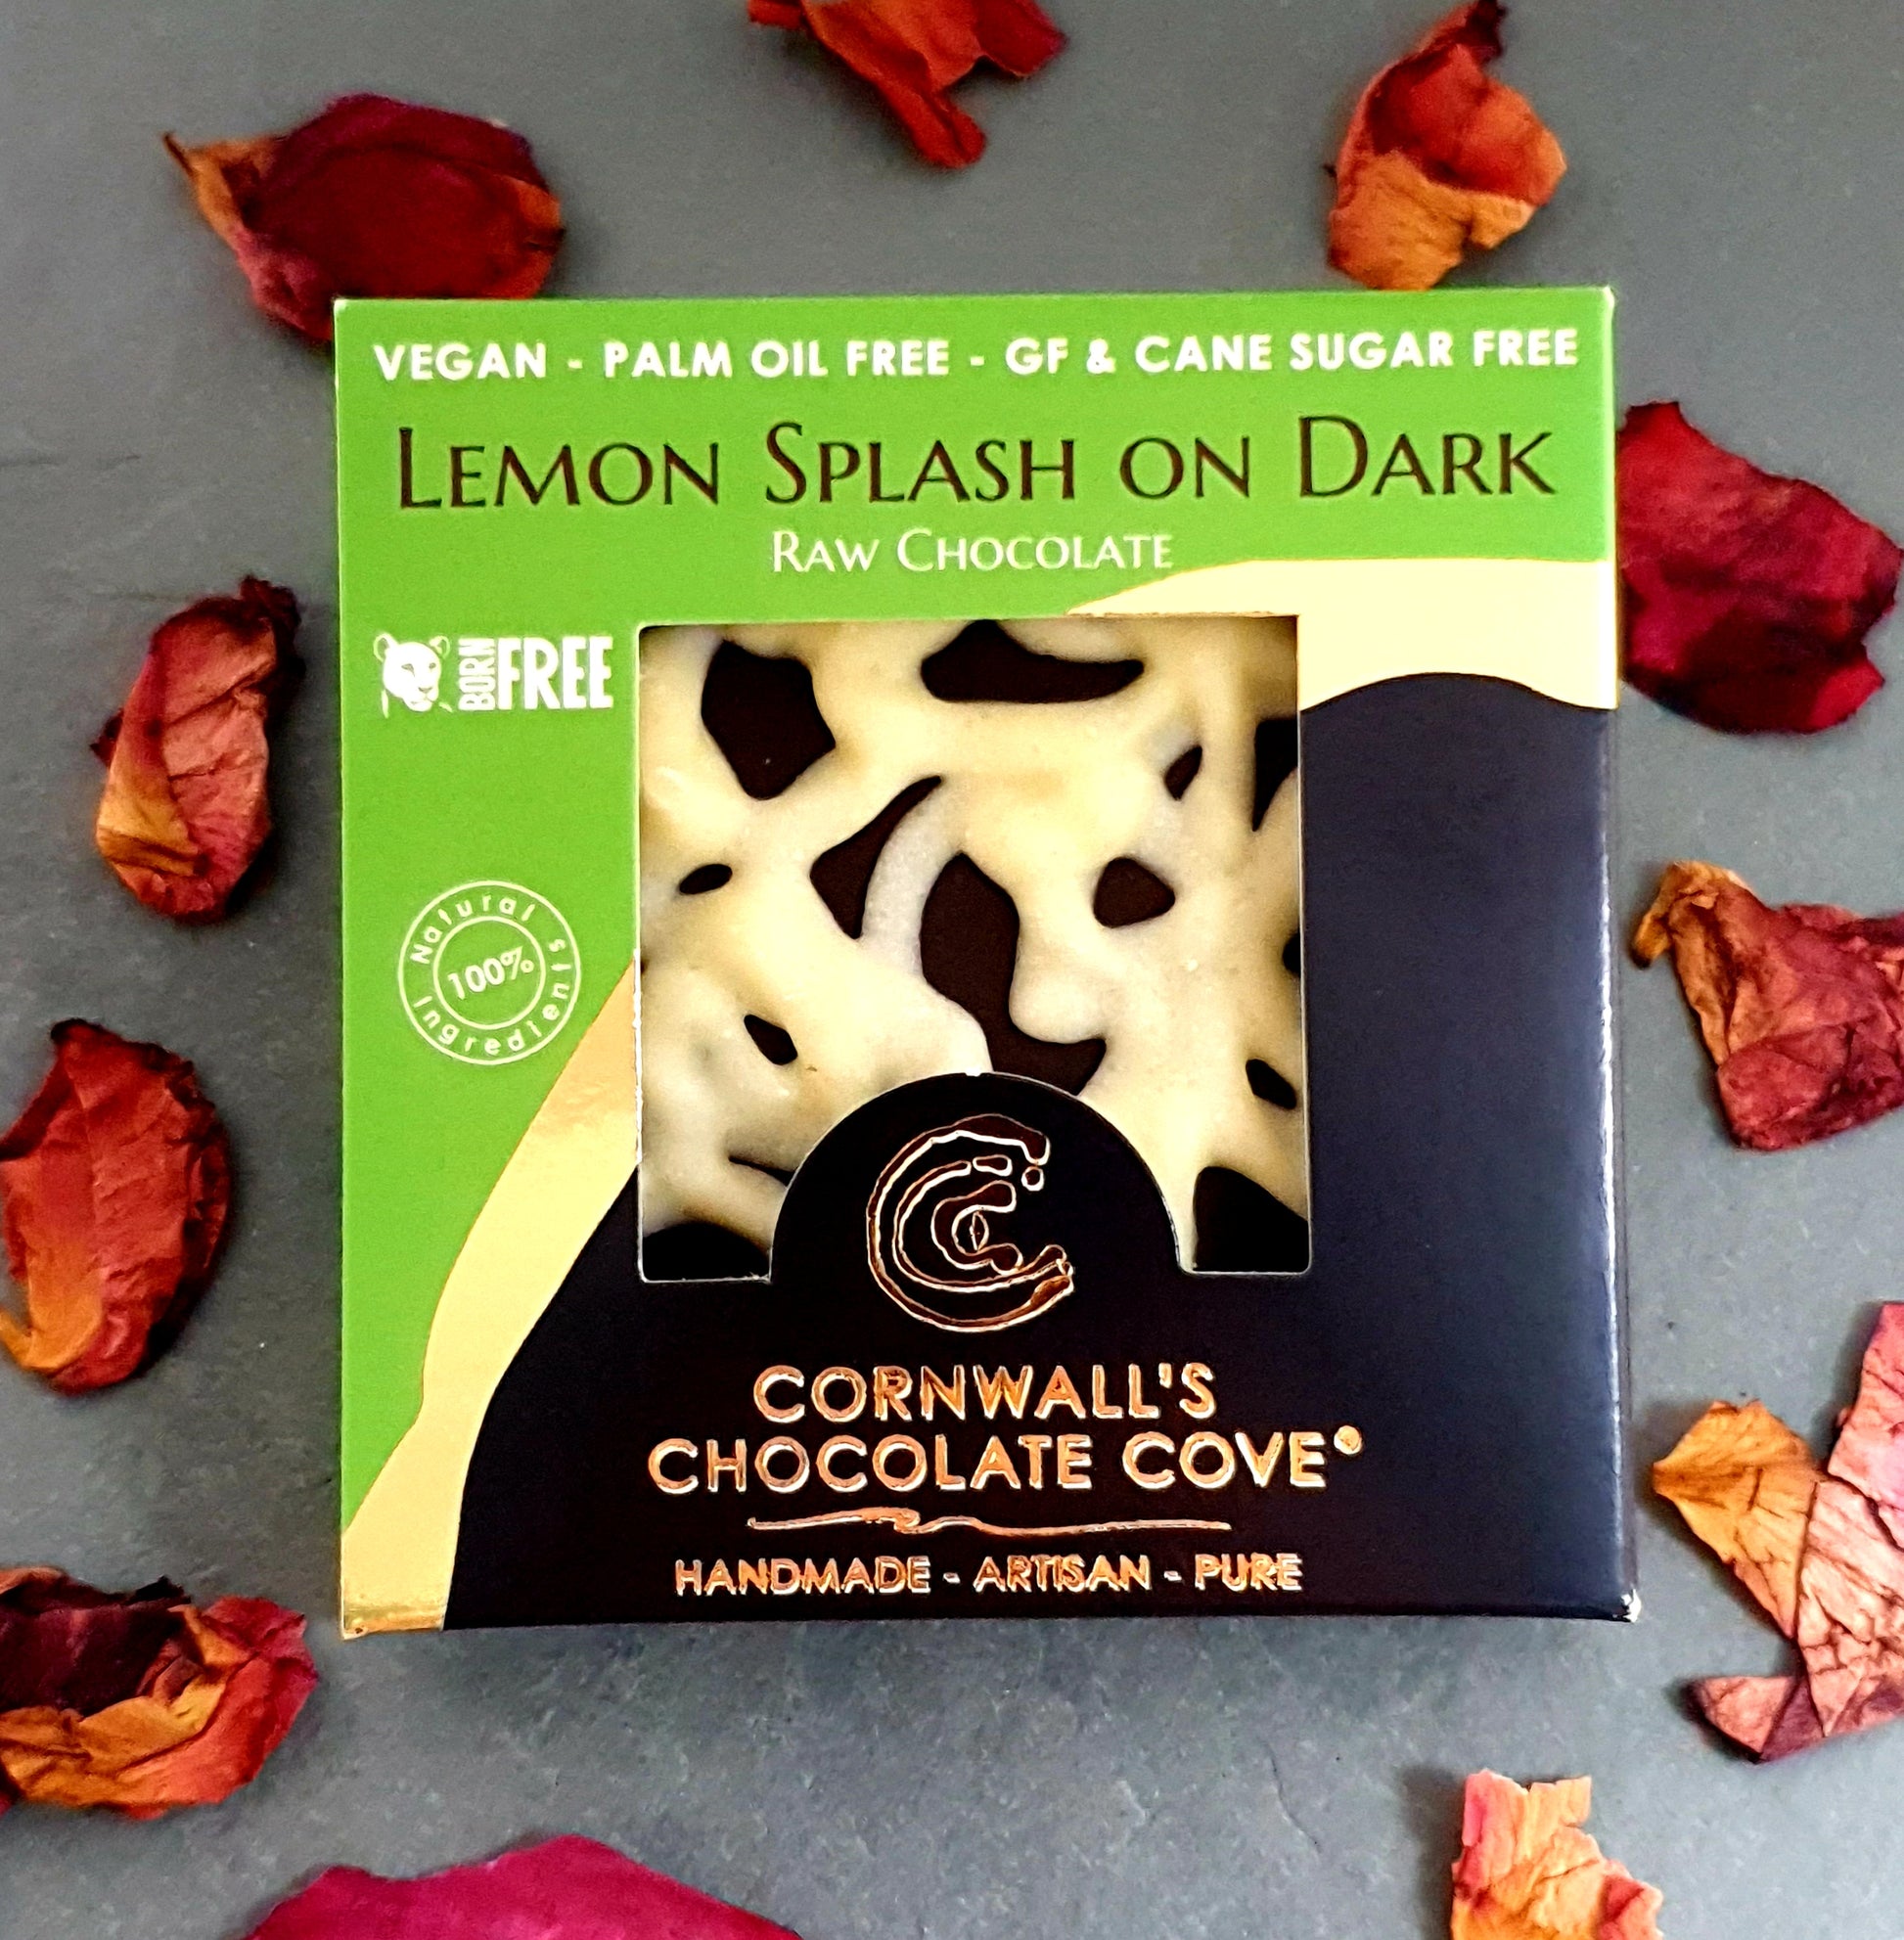 Cornwall's Chocolate Cove plant based, soya, palm oil, cane sugar and gluten free chocolate. Lemon Splash on Dark